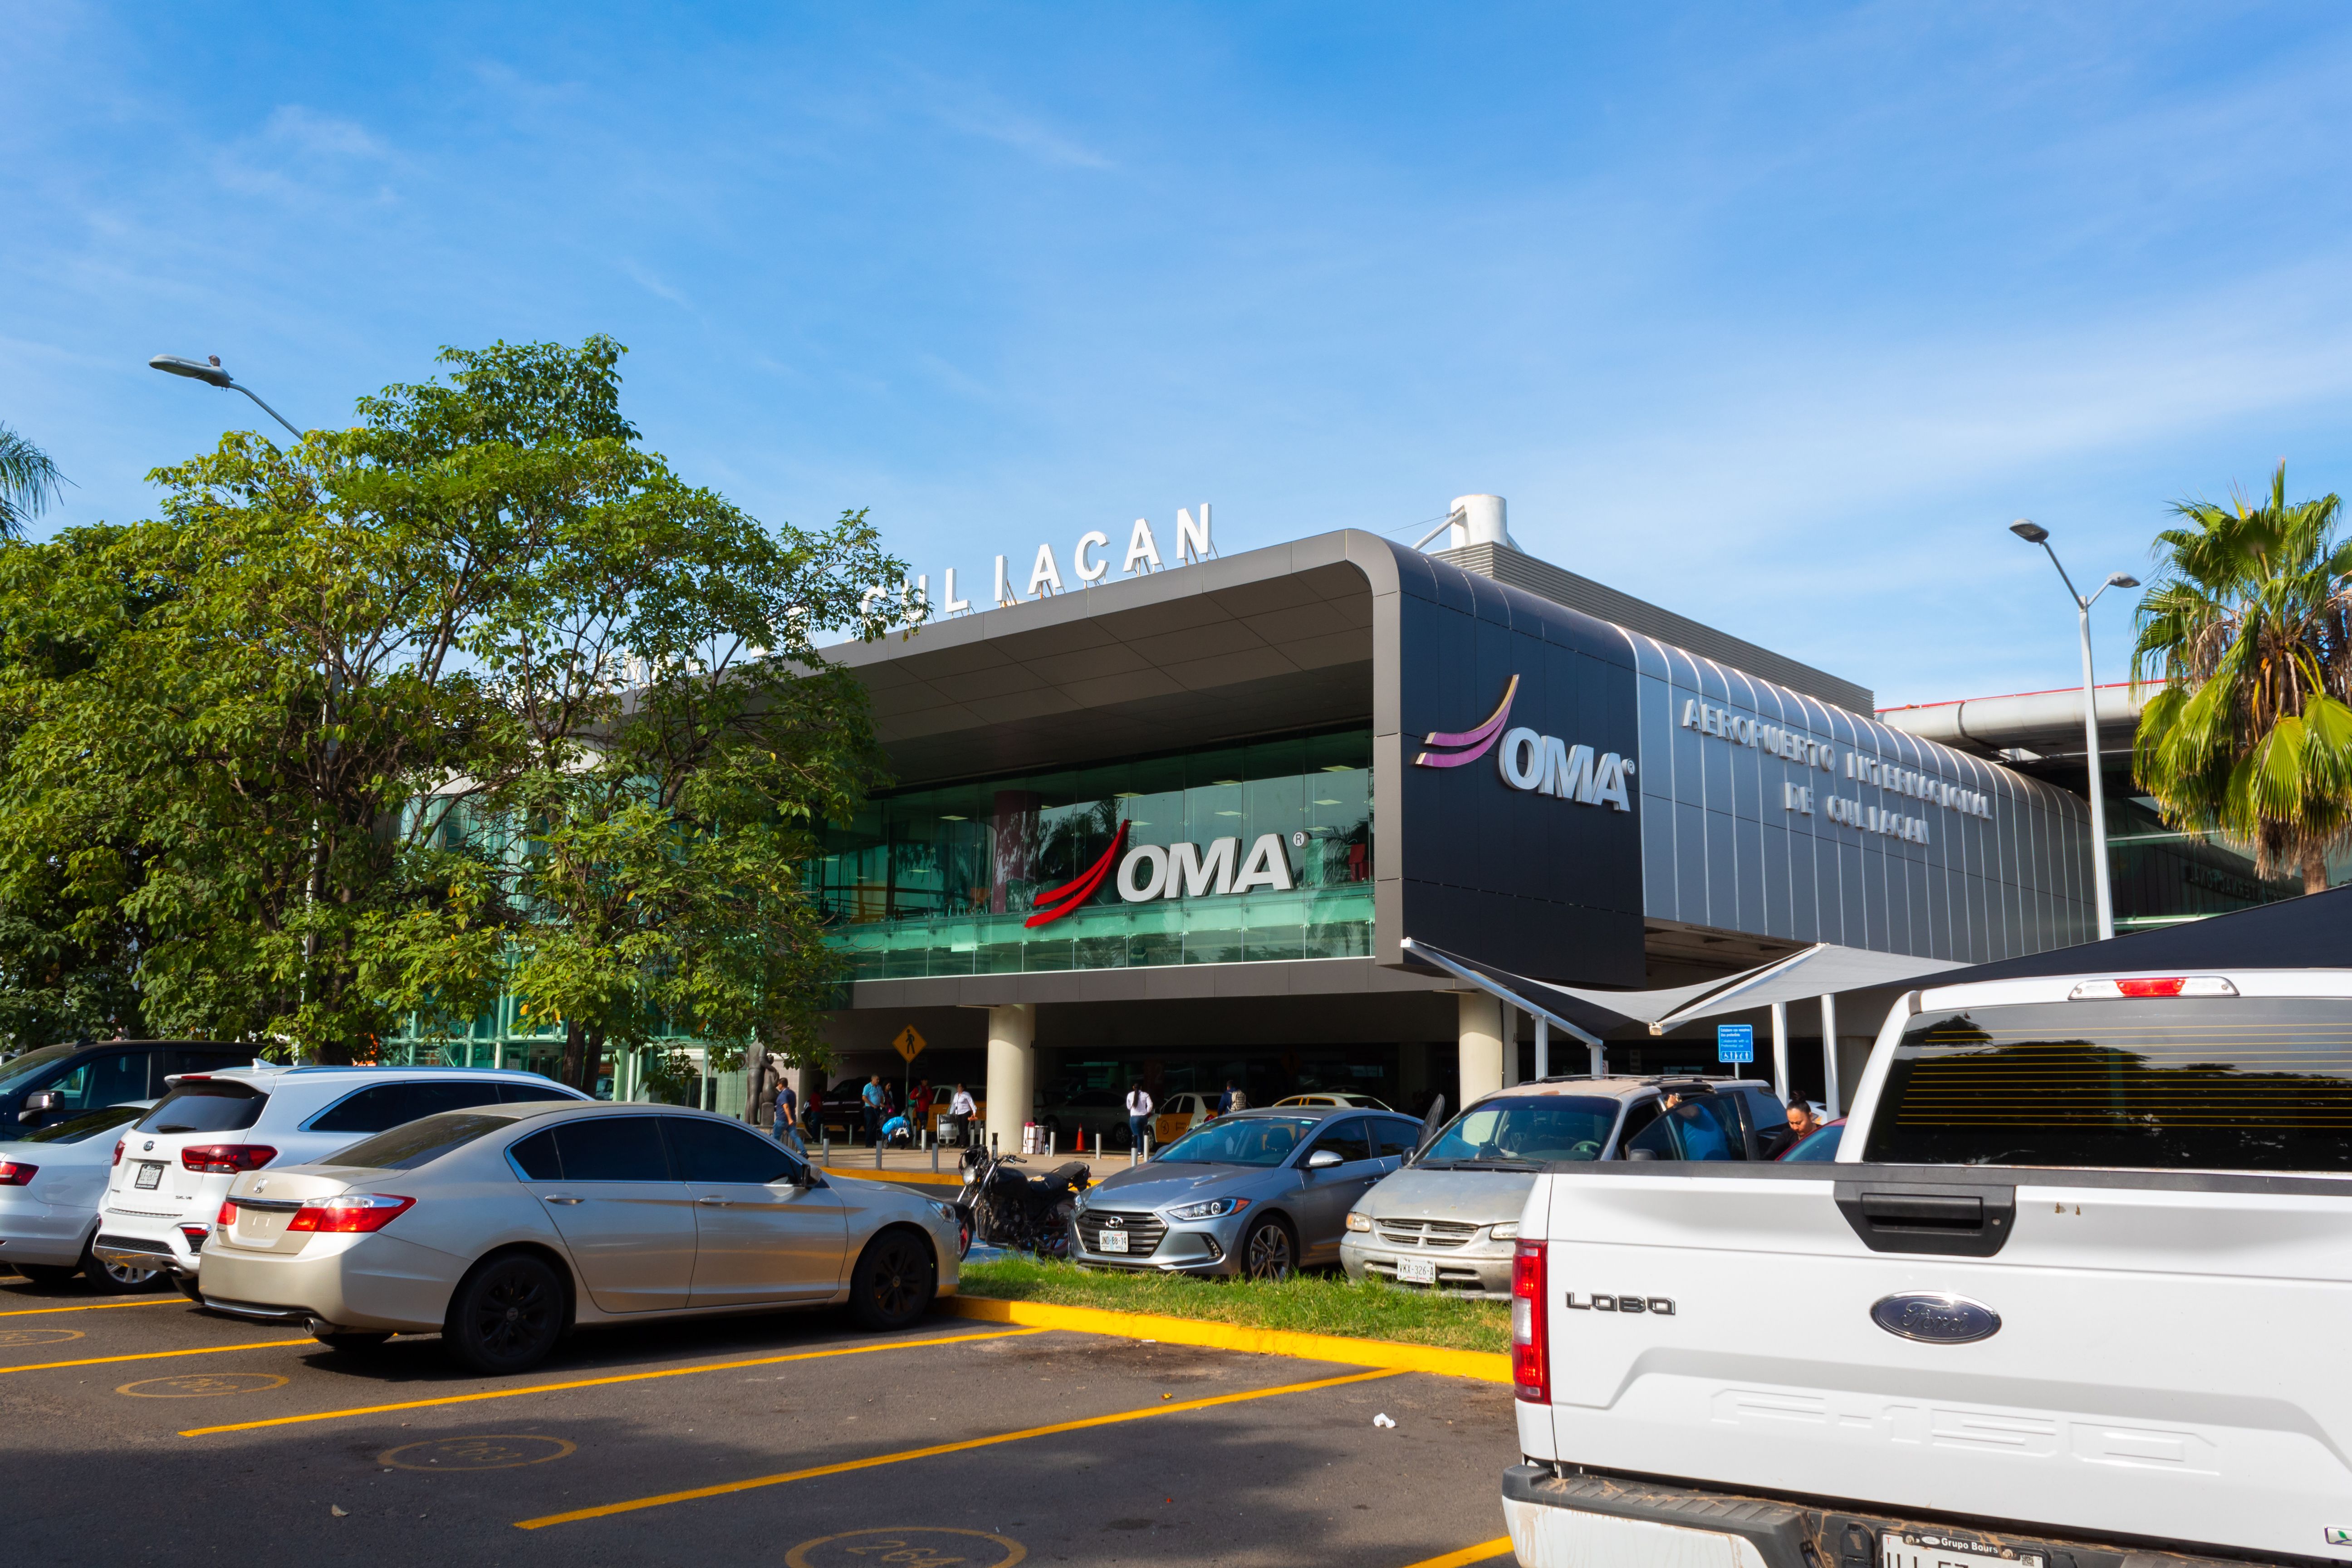 Culiacán International Airport